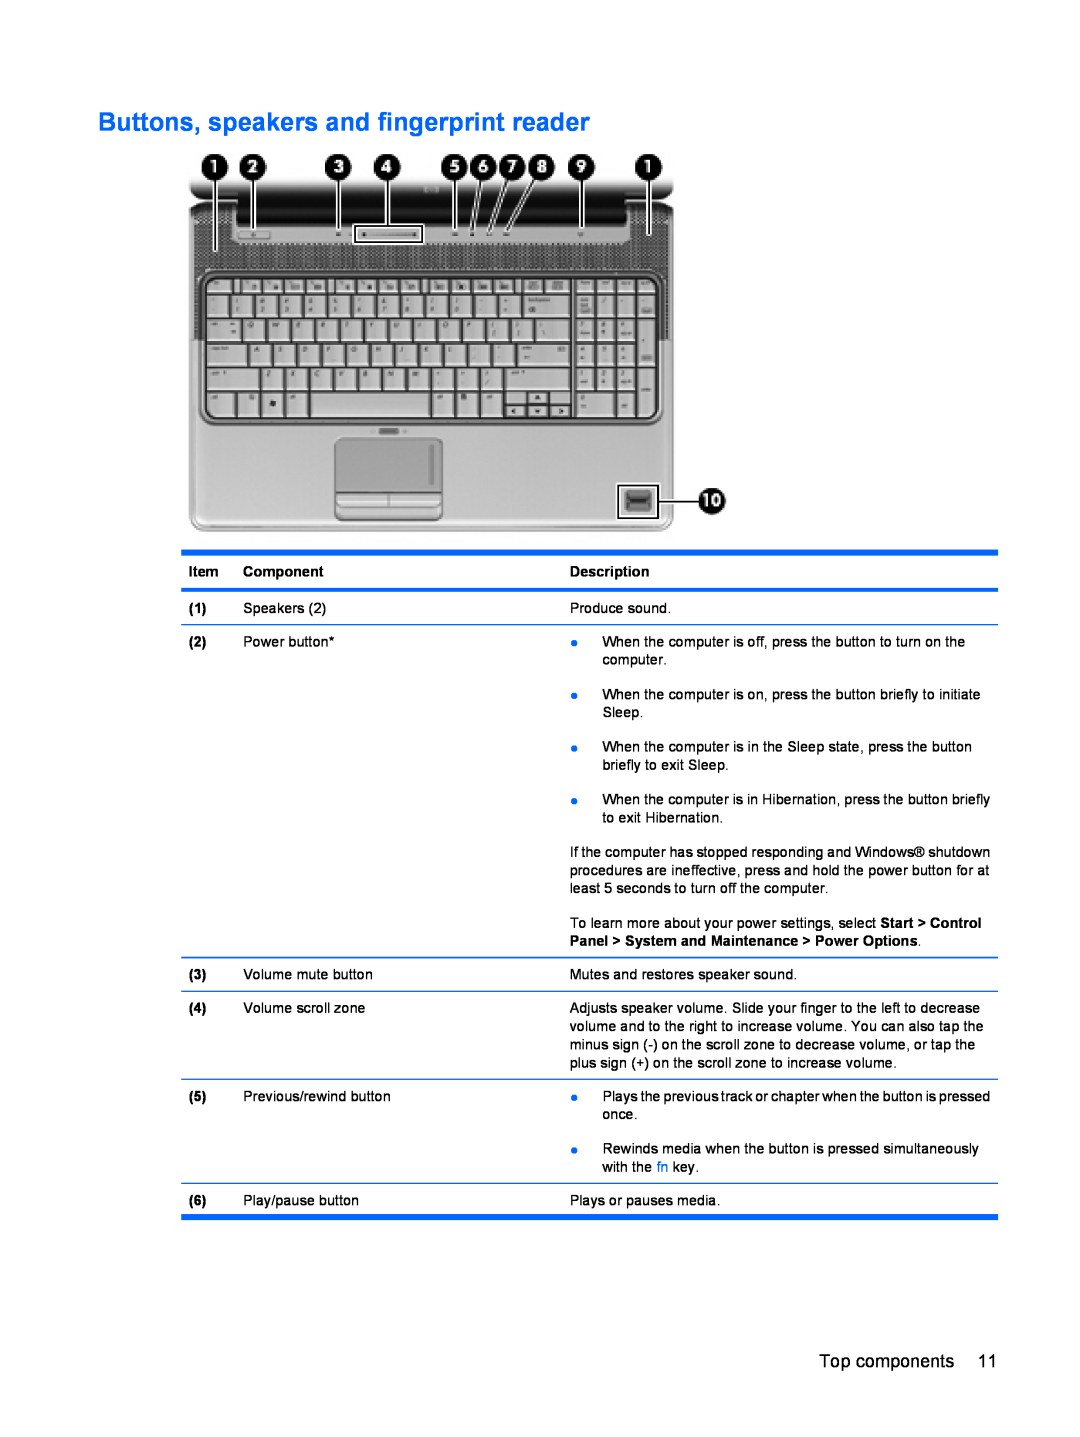 HP DV6 manual Buttons, speakers and fingerprint reader 